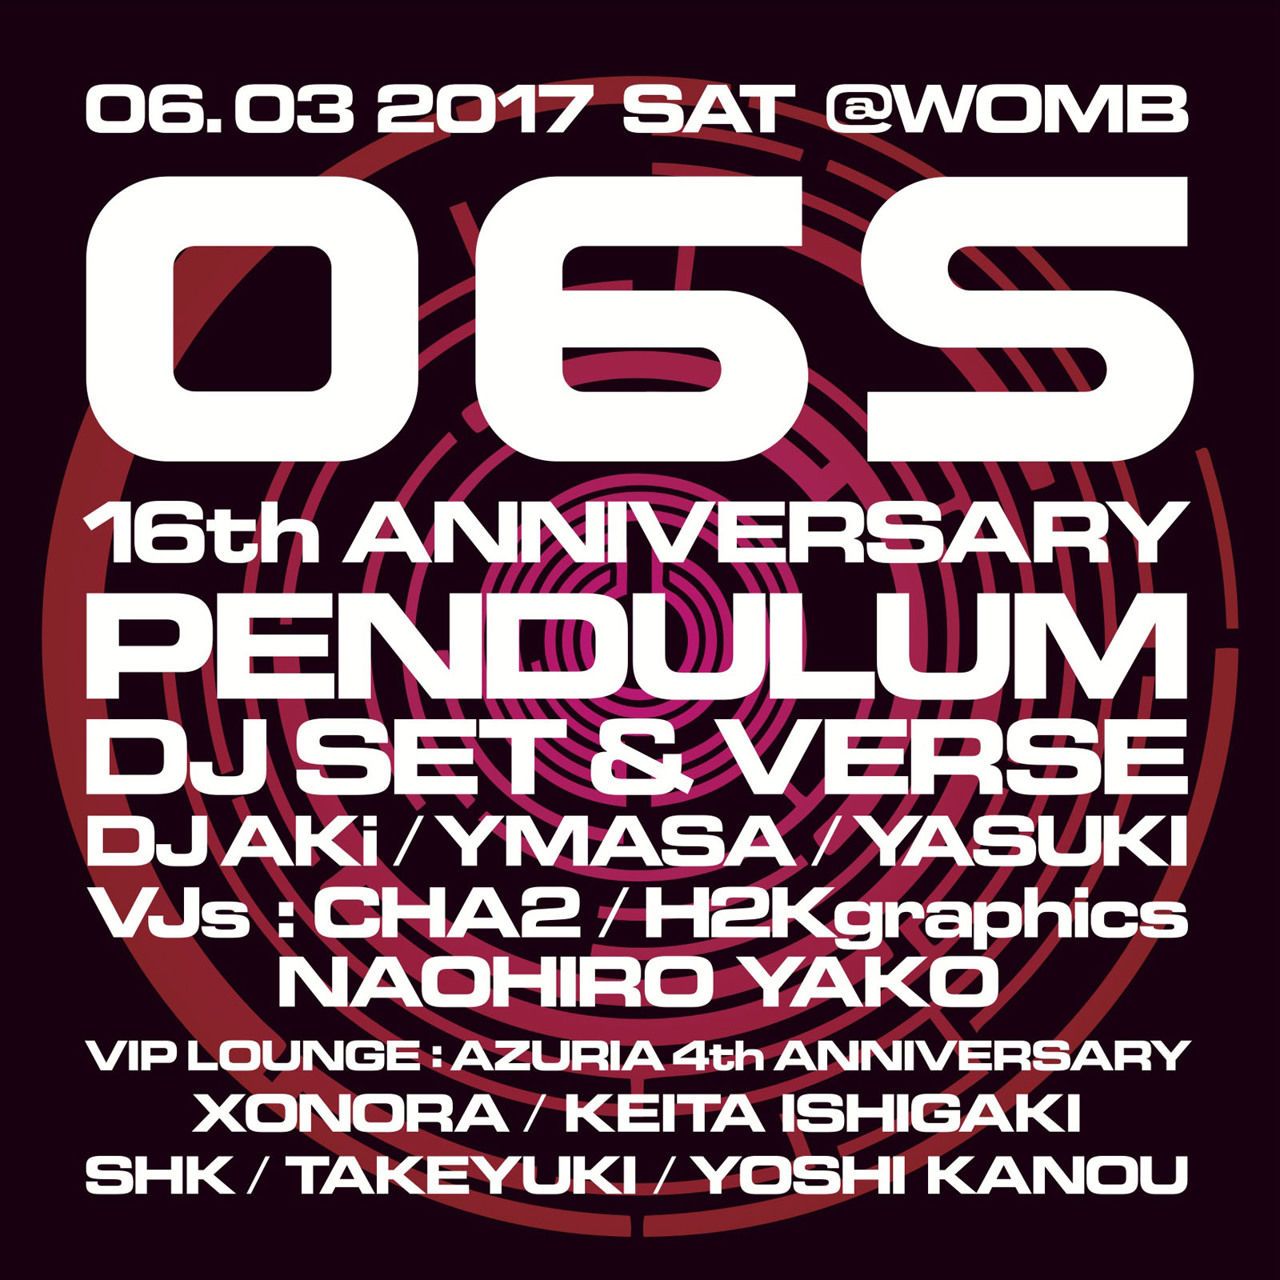 06S 16th ANNIVERSARY feat. PENDULUM DJ SET